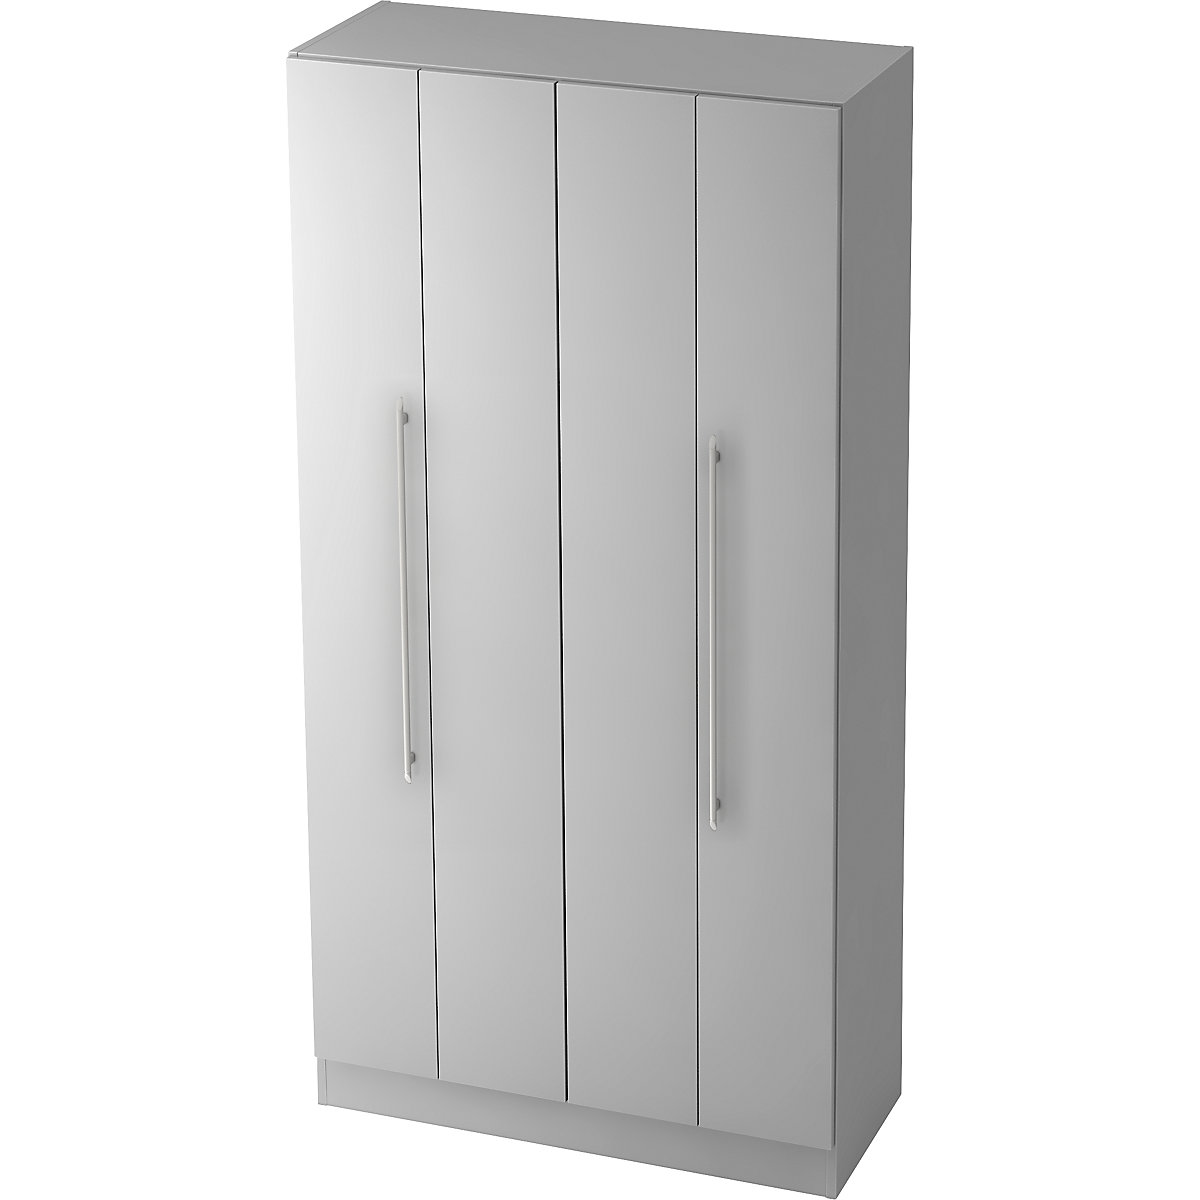 Folding door cupboard VIOLA, angle of aperture 170°, 4 shelves, light grey-7